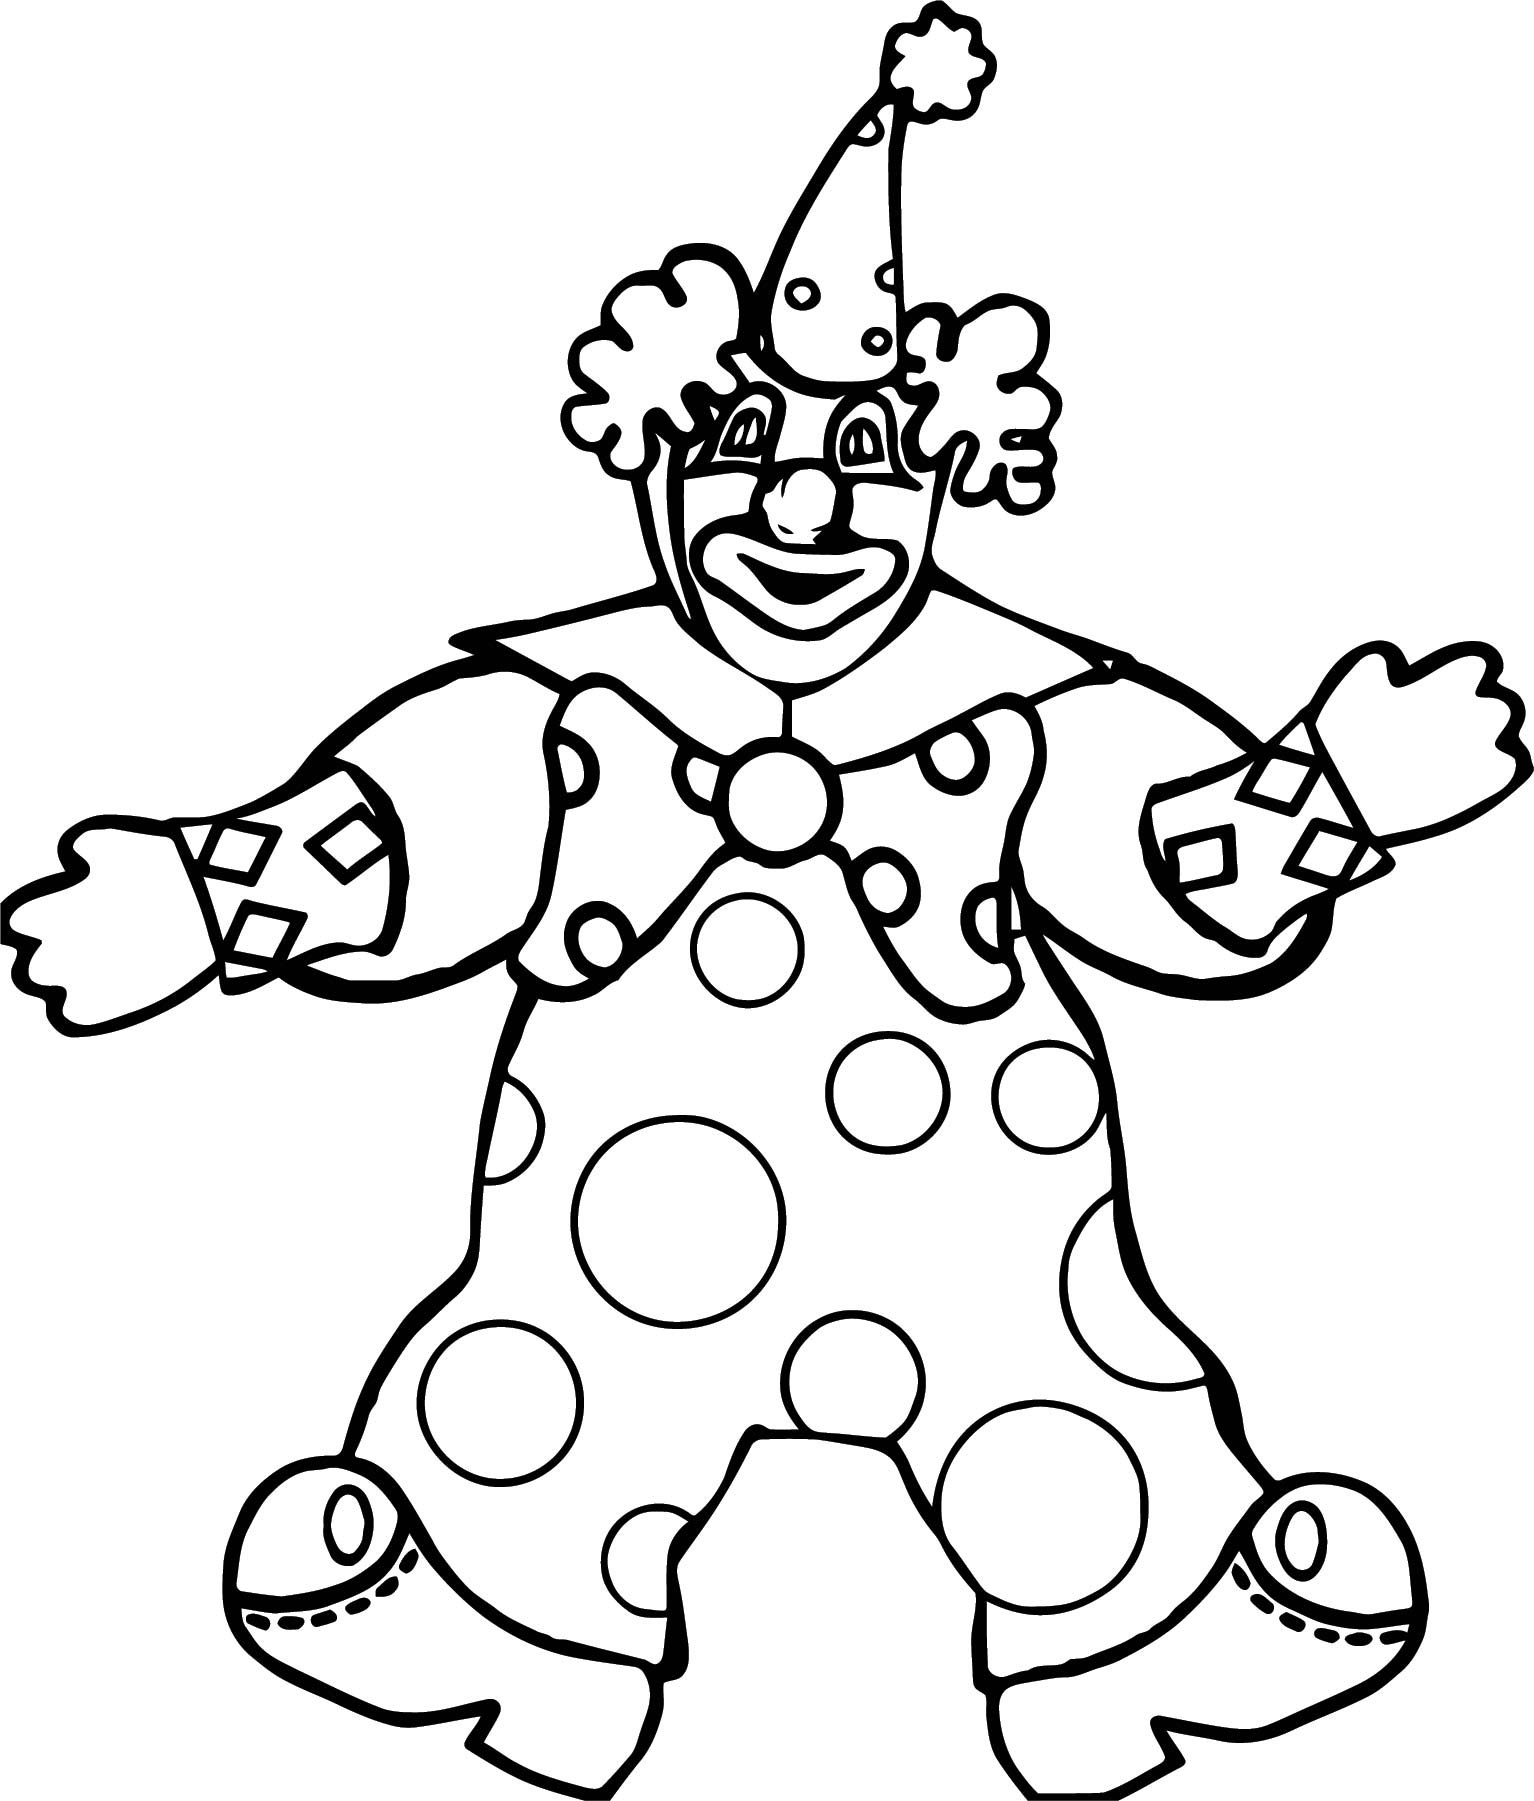 Клоун раскраска для детей 4 5. Клоун раскраска. Клоун раскраска для детей. Раскраска весёлый клоун для детей. Клоун для раскрашивания детям.